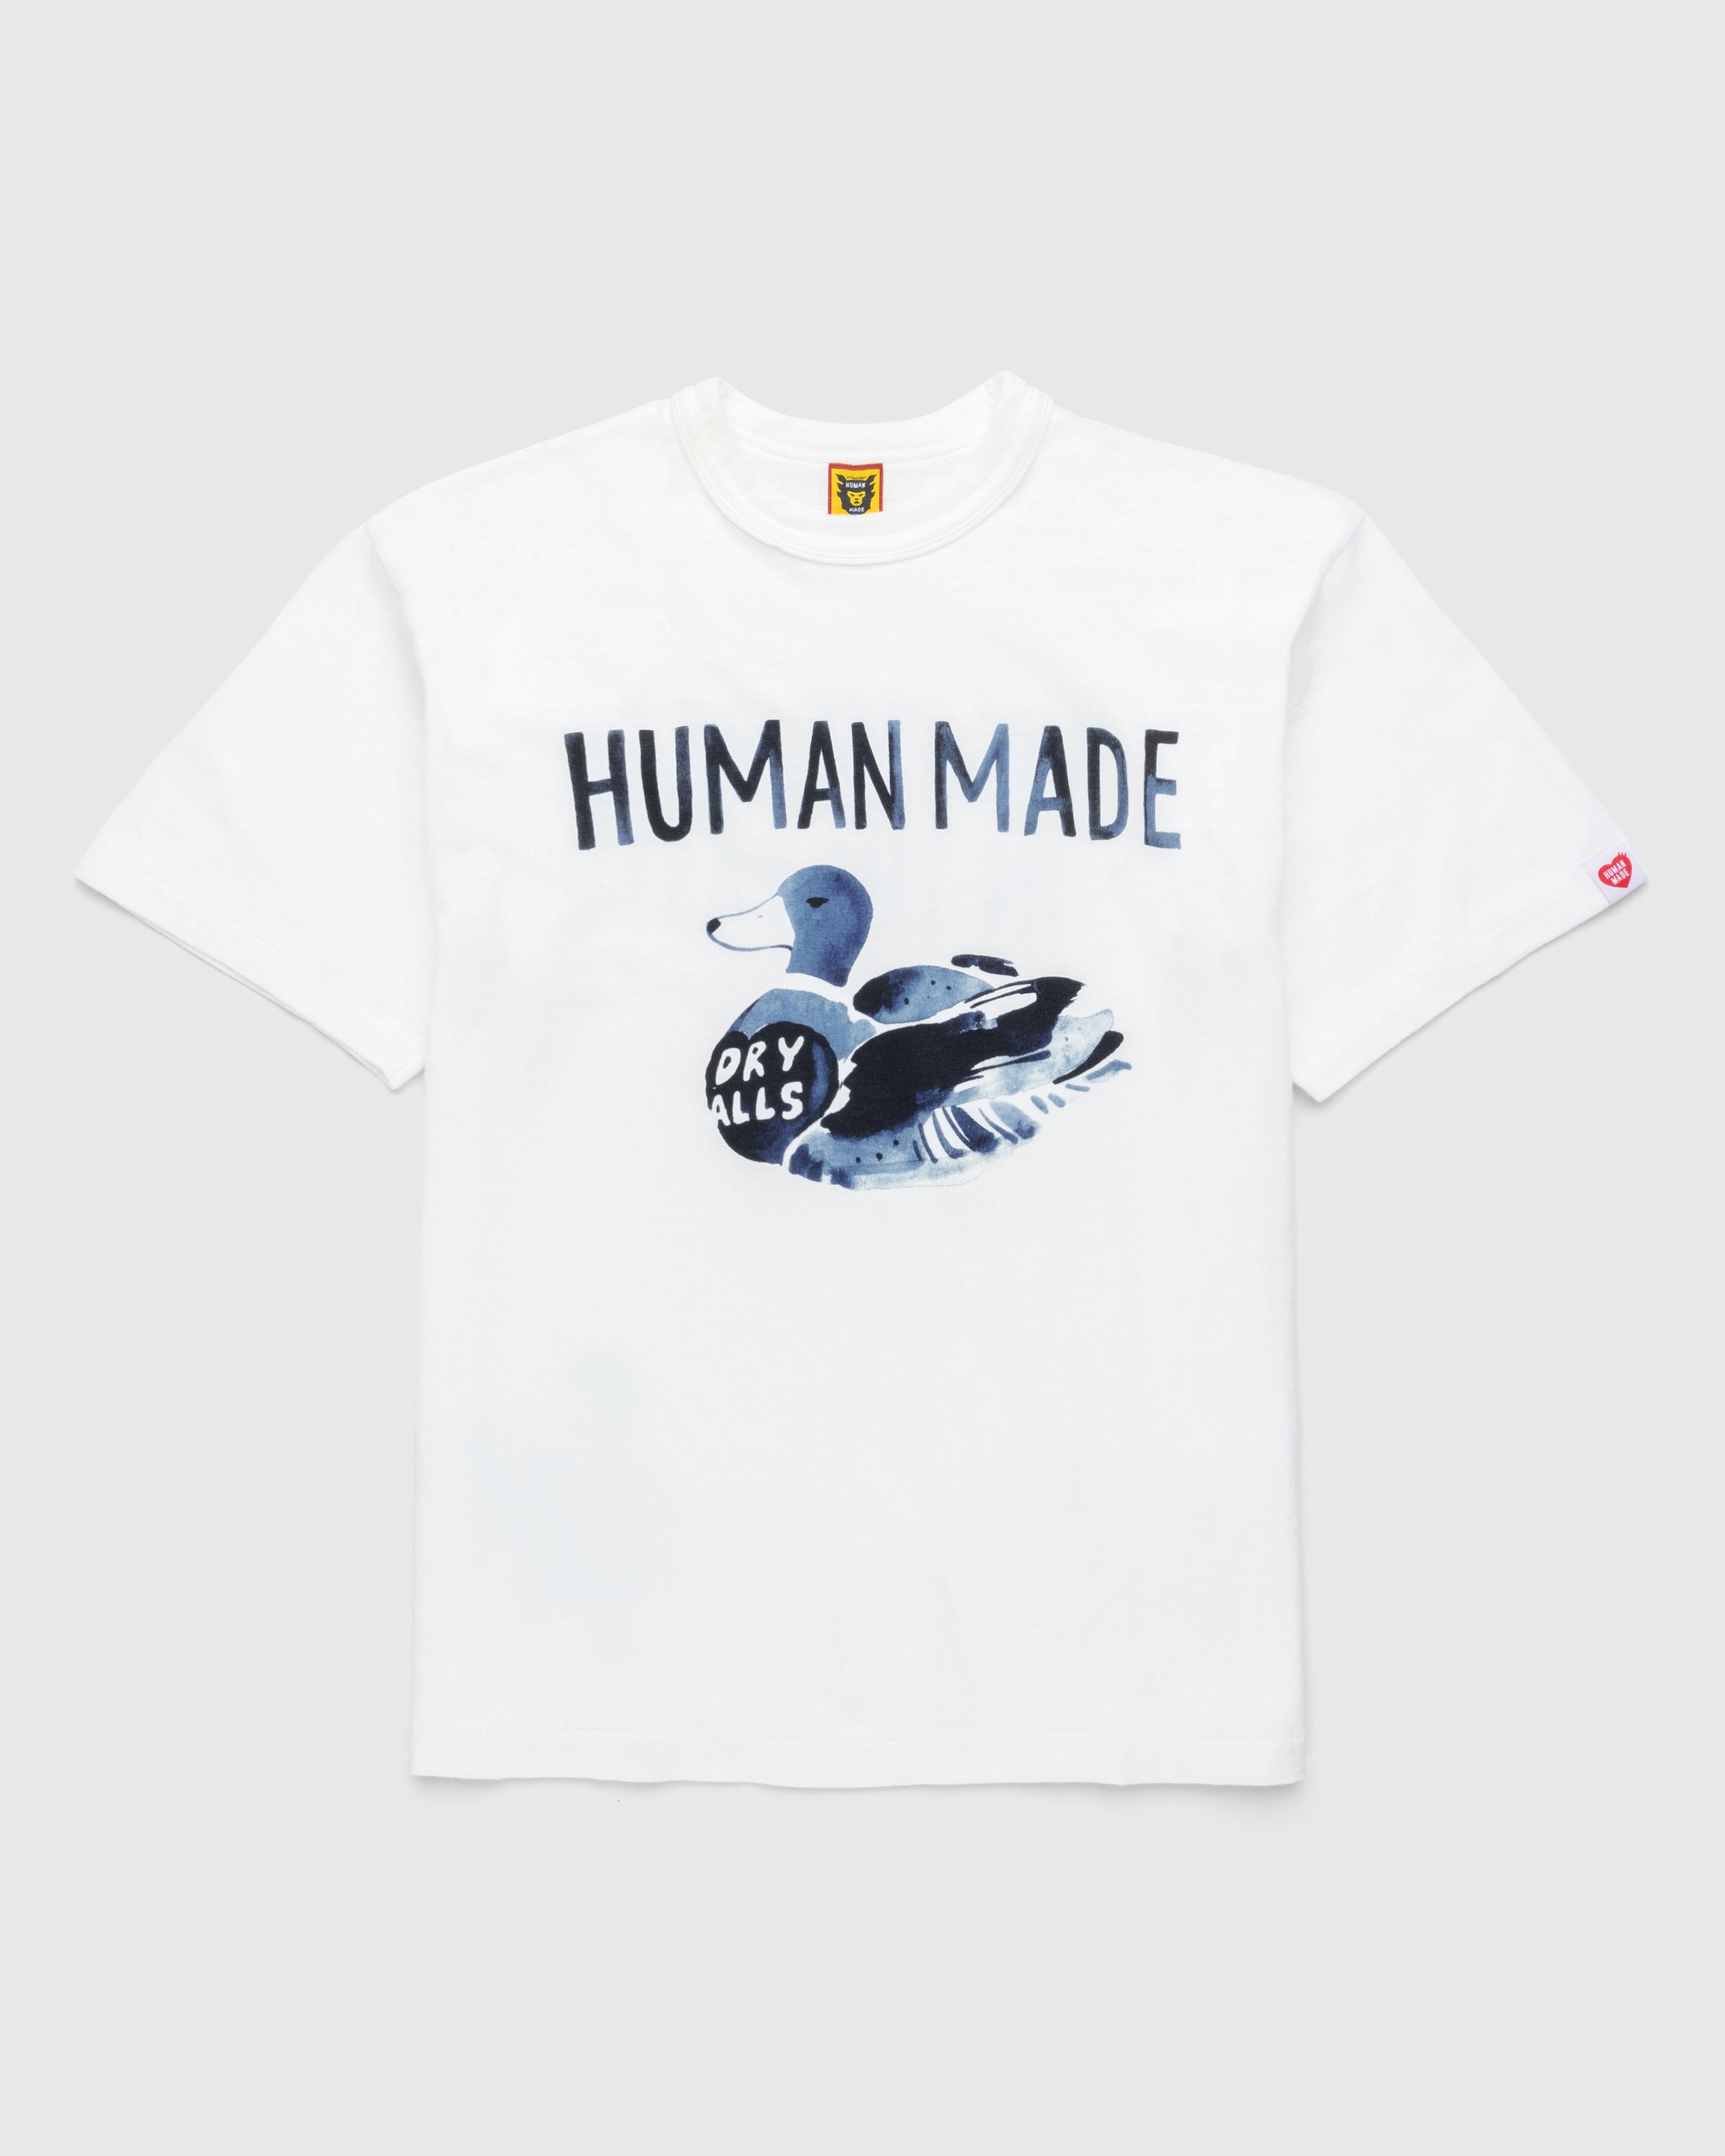 Adidas x Human Made Men SSL Tee white